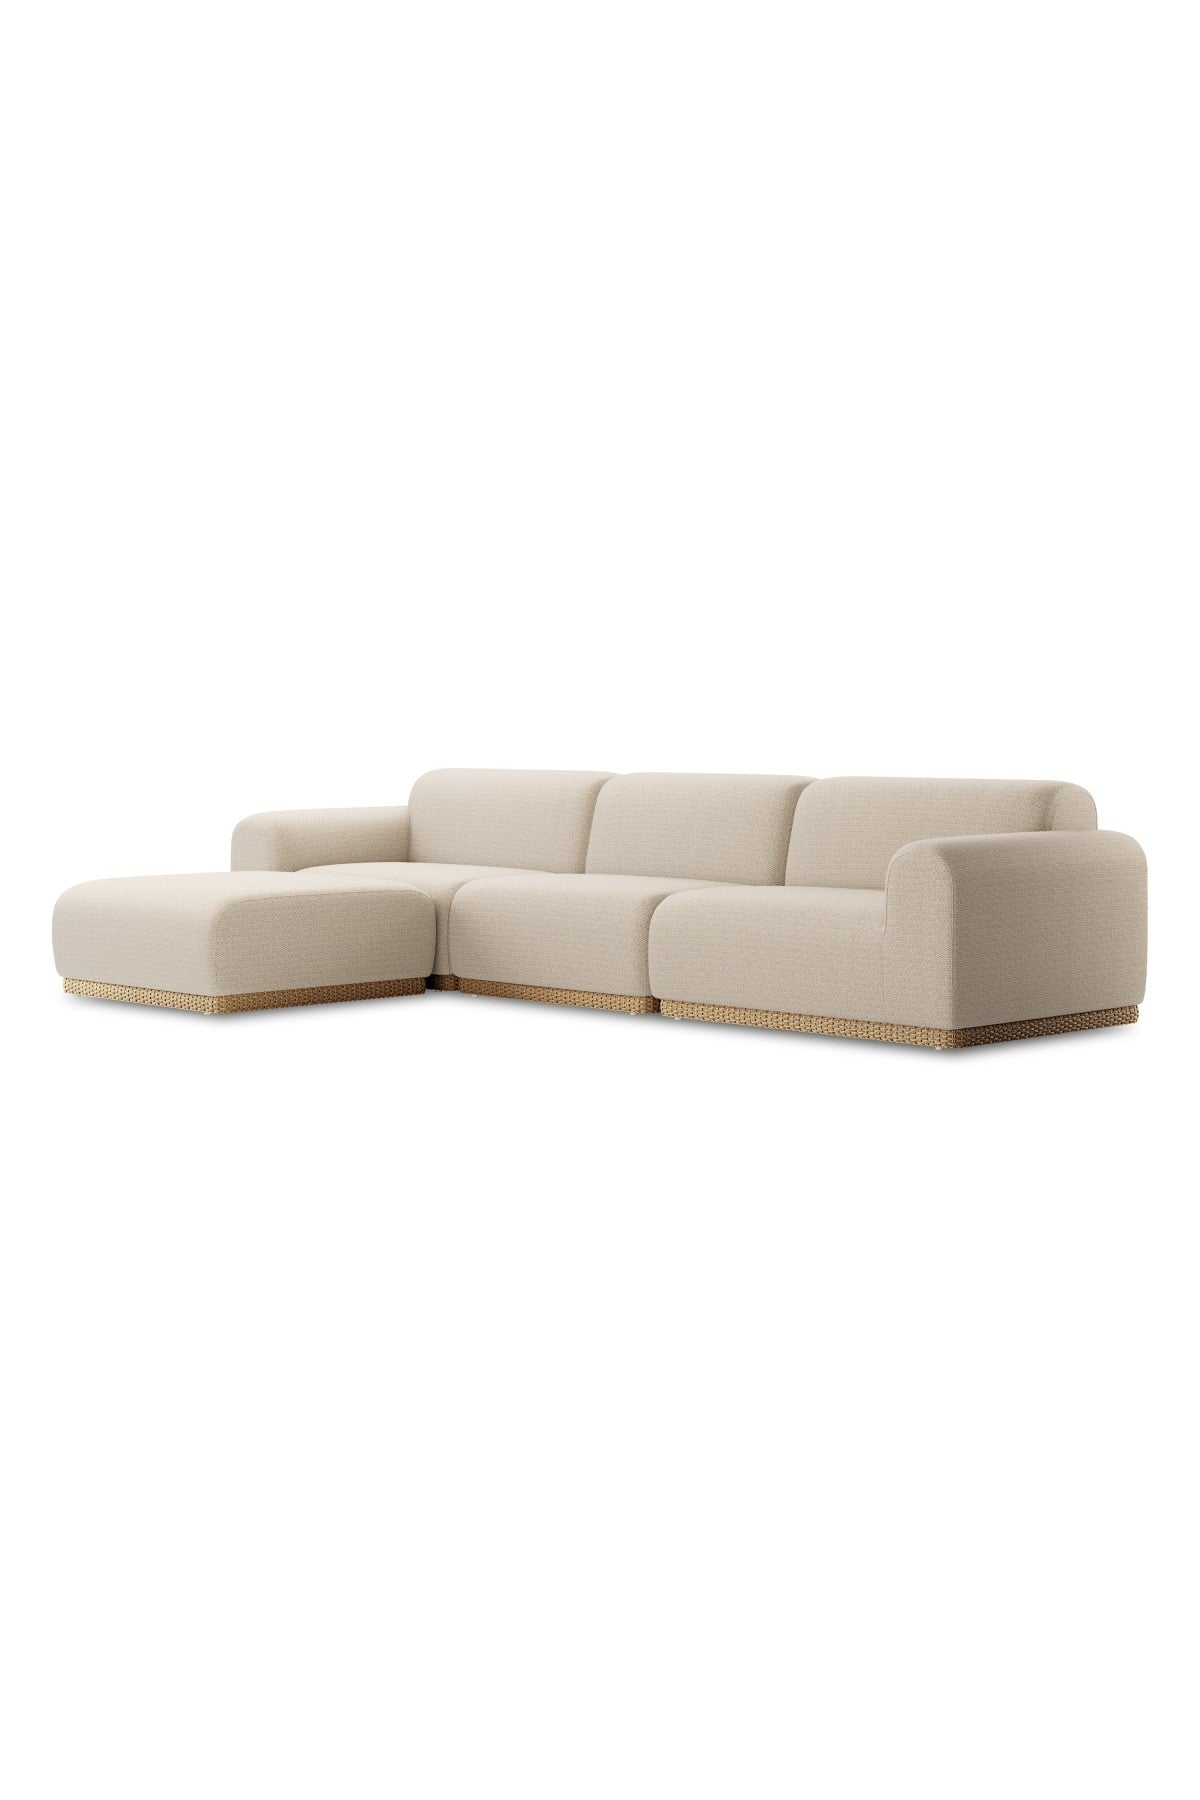 Romley Outdoor 3-Piece Sofa/Sectional